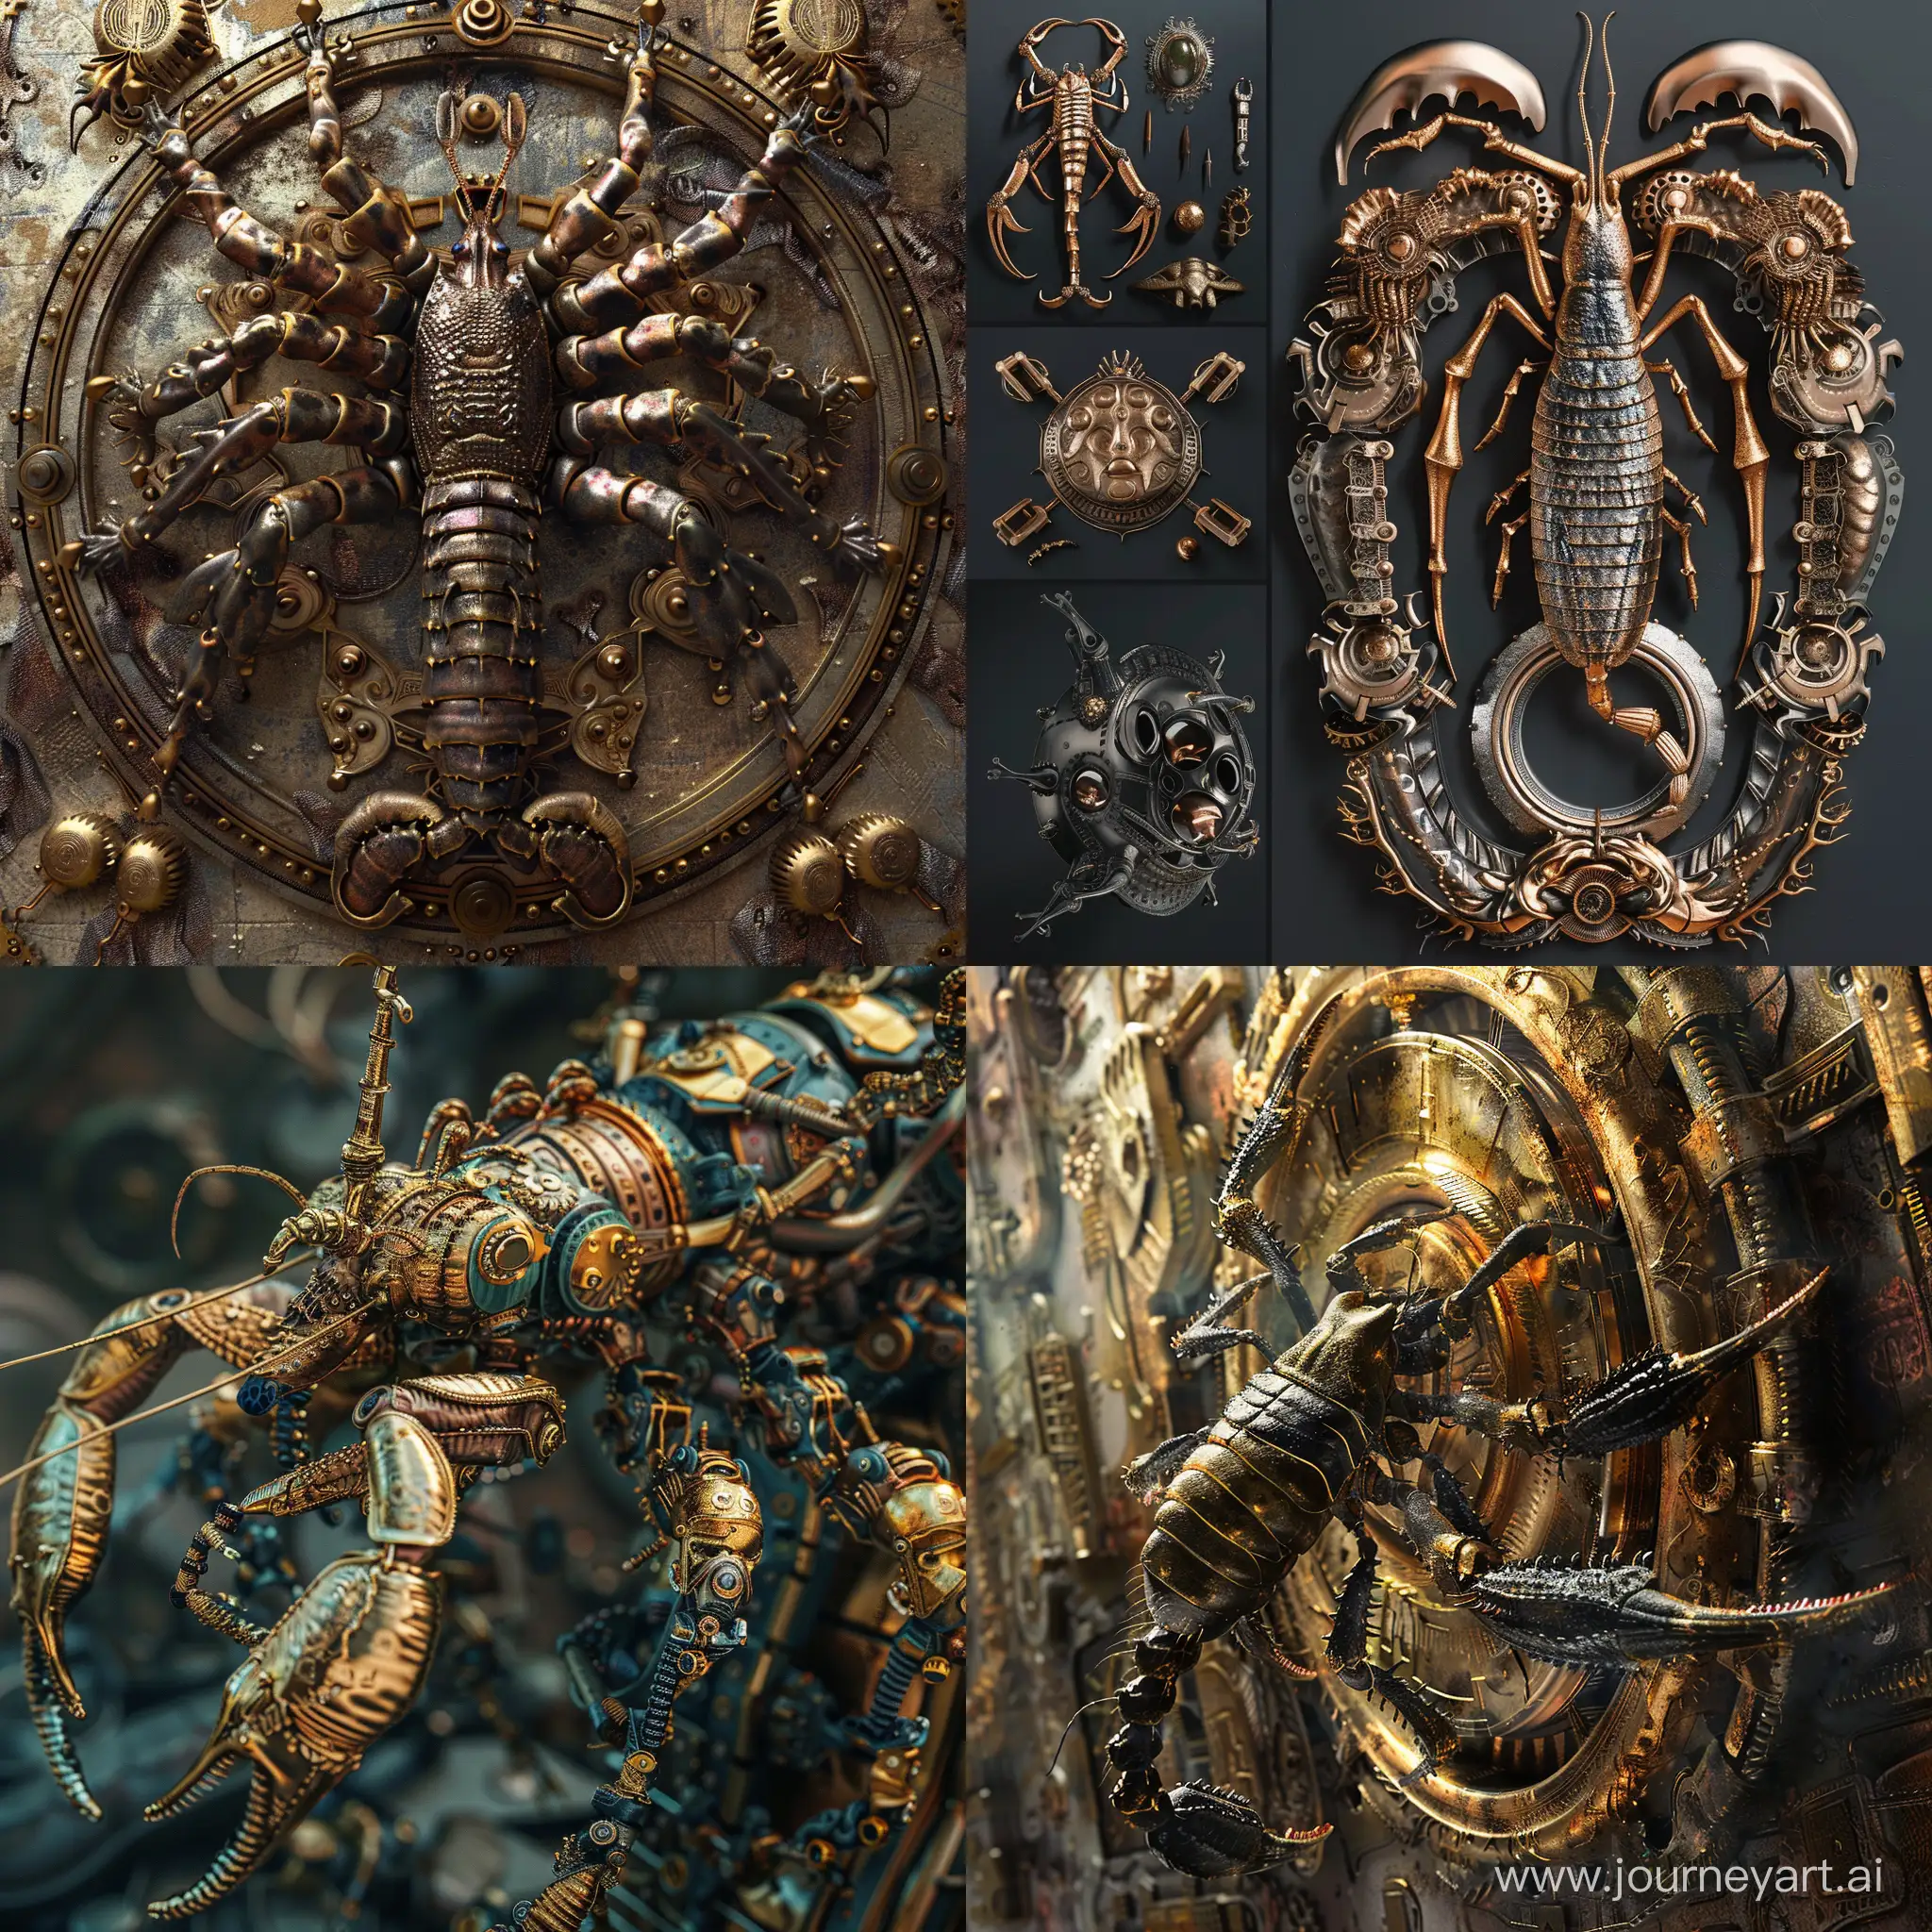 insane detail, deep sea creatures, scropion, myth creatures, steampunk, perfect exact rendering, gold artifact